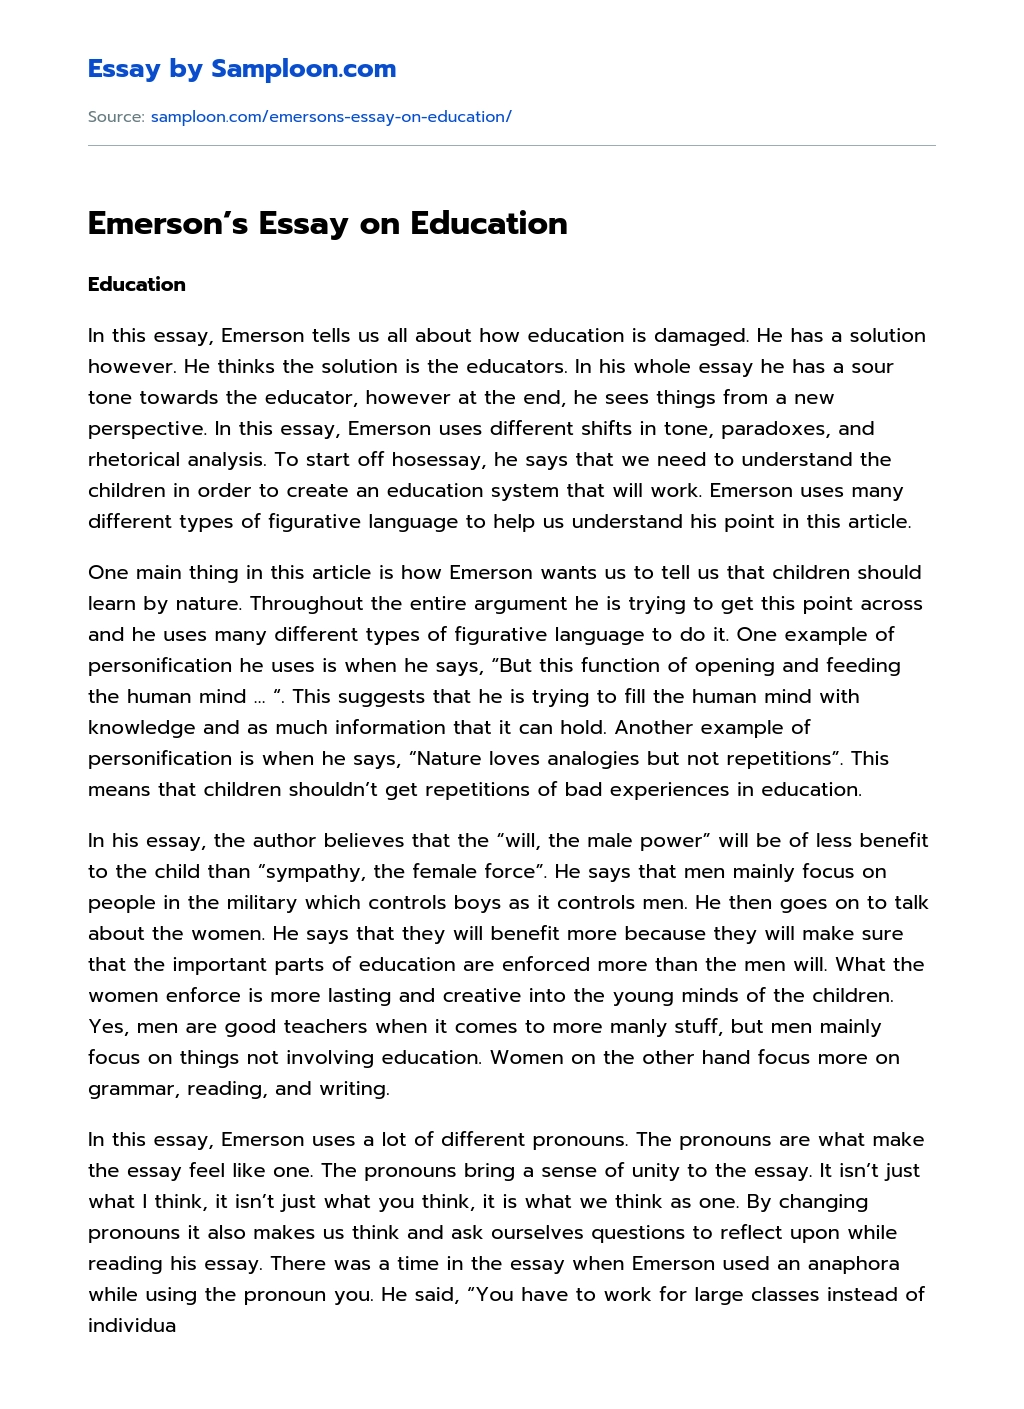 Emerson’s Essay on Education Rhetorical Analysis essay